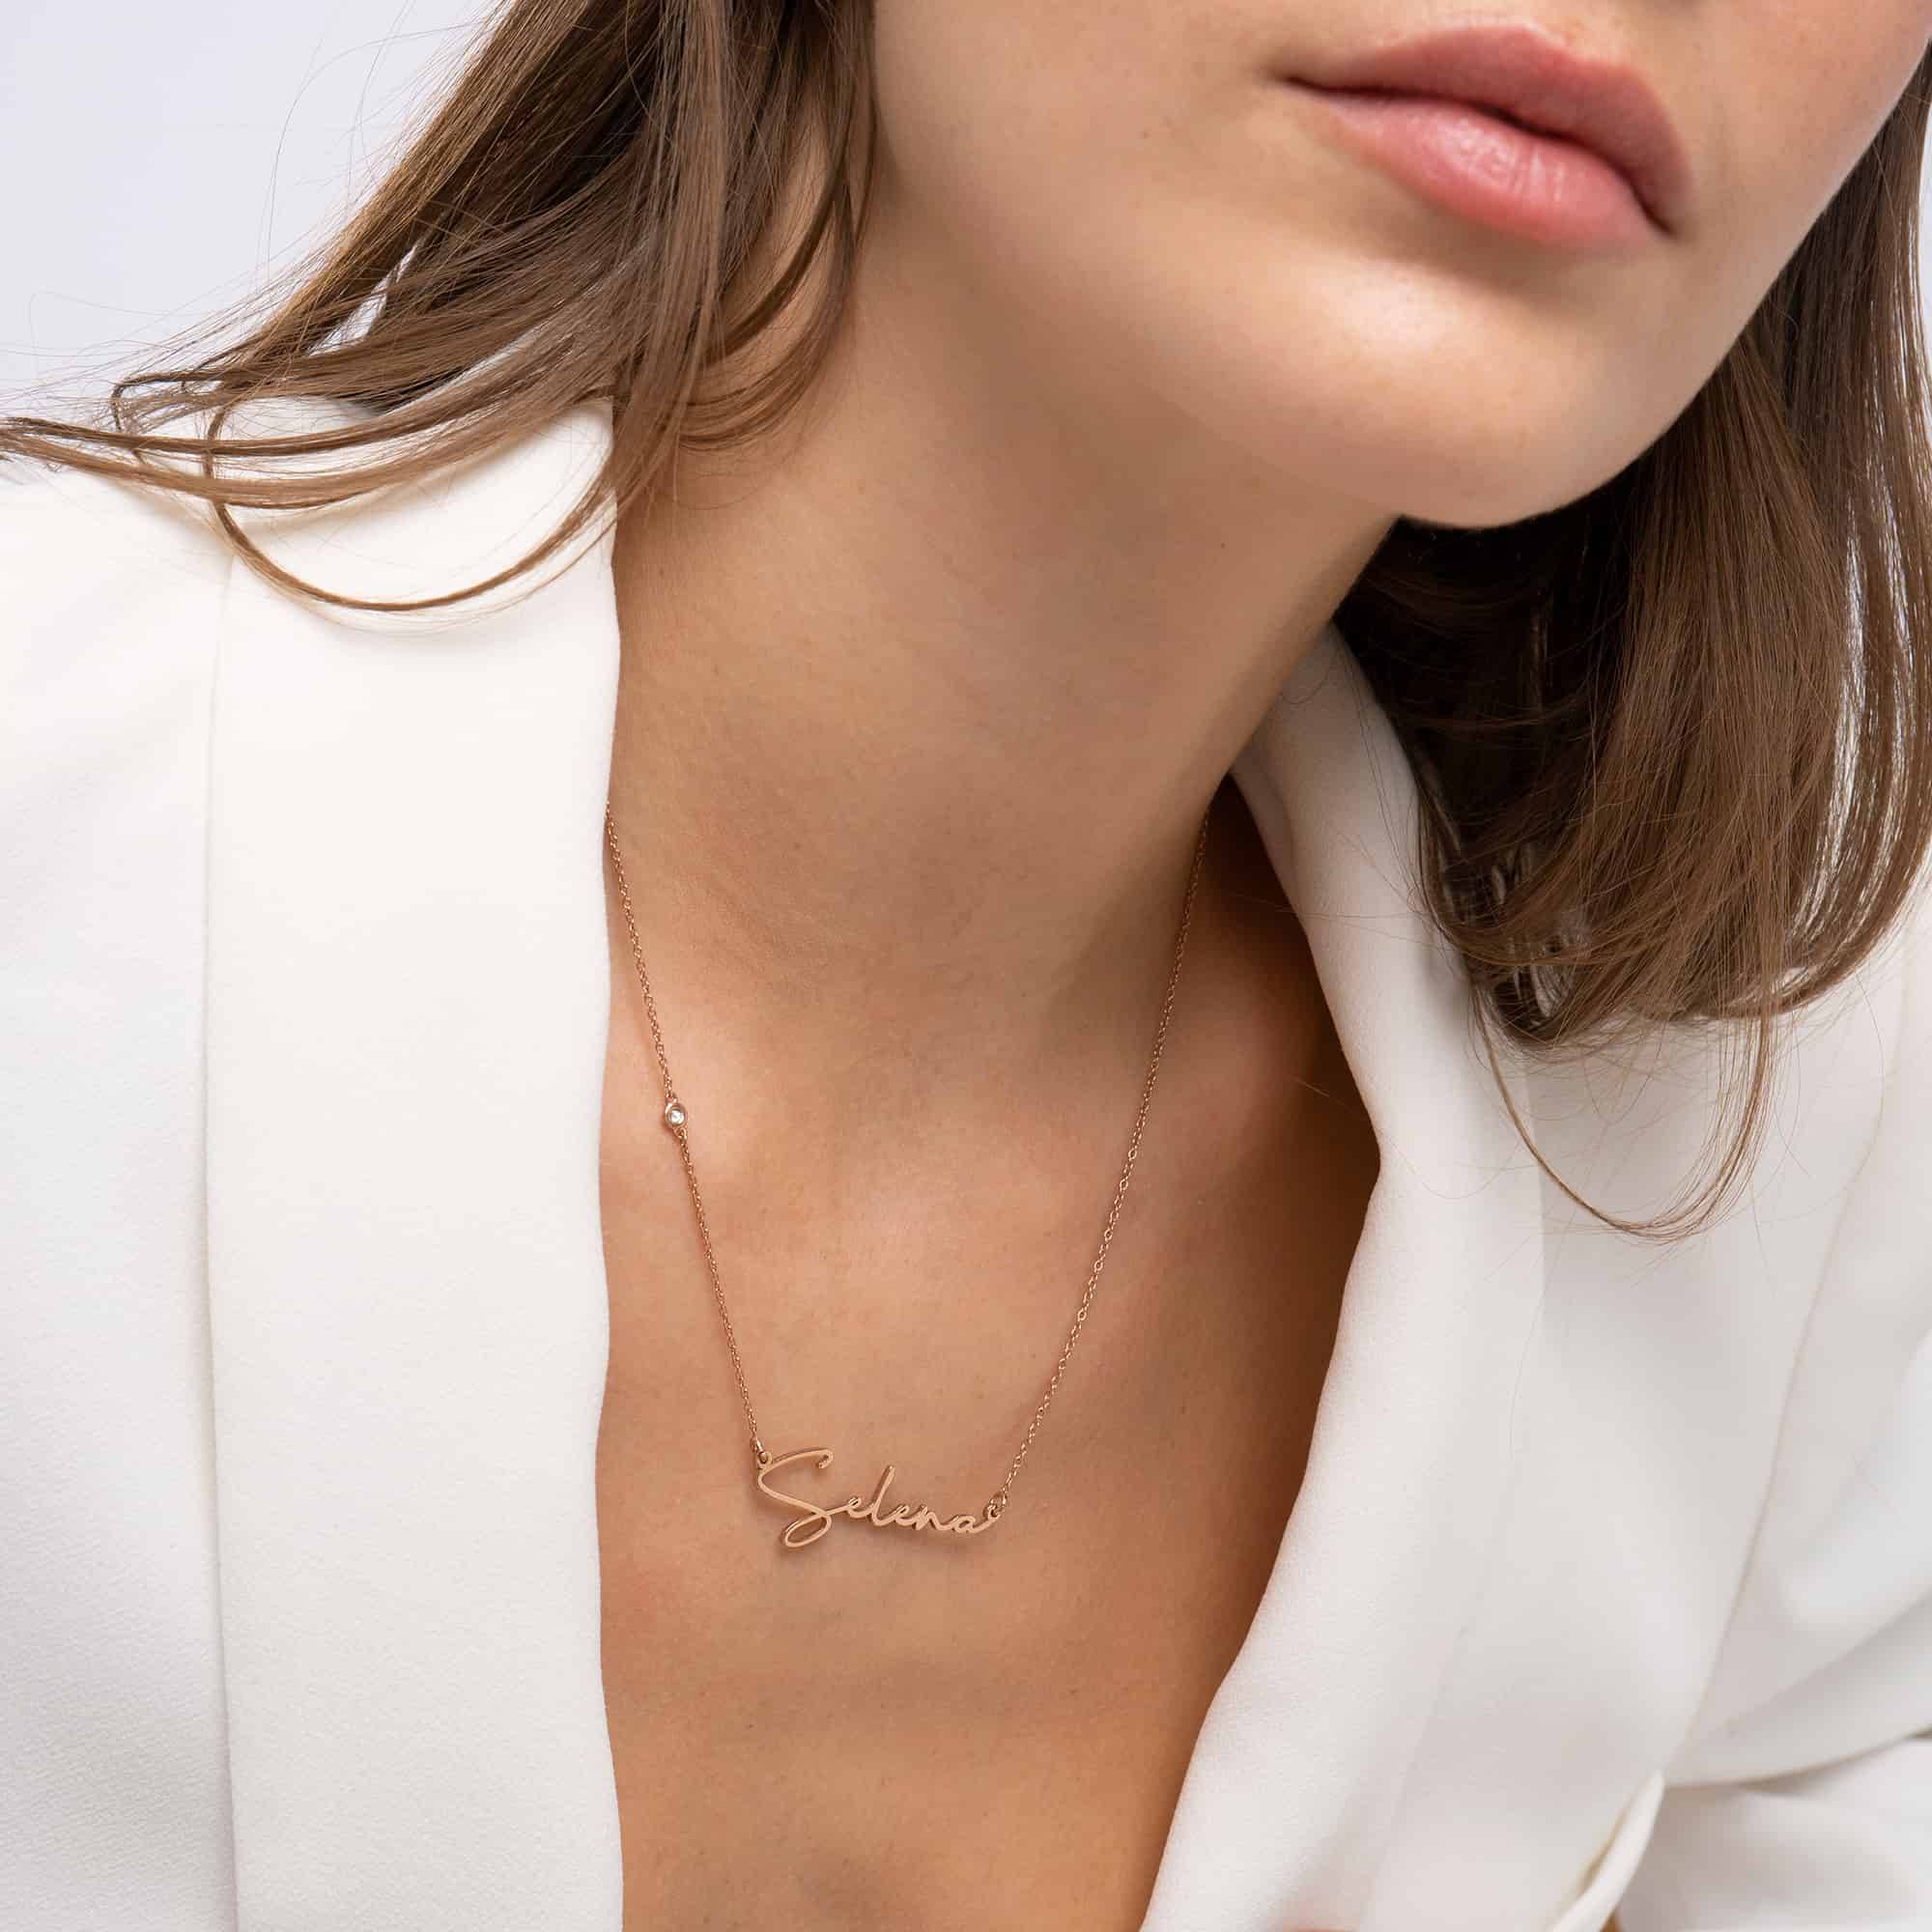 Paris Name Necklace with Diamonds - Rose Gold Vermeil-4 product photo